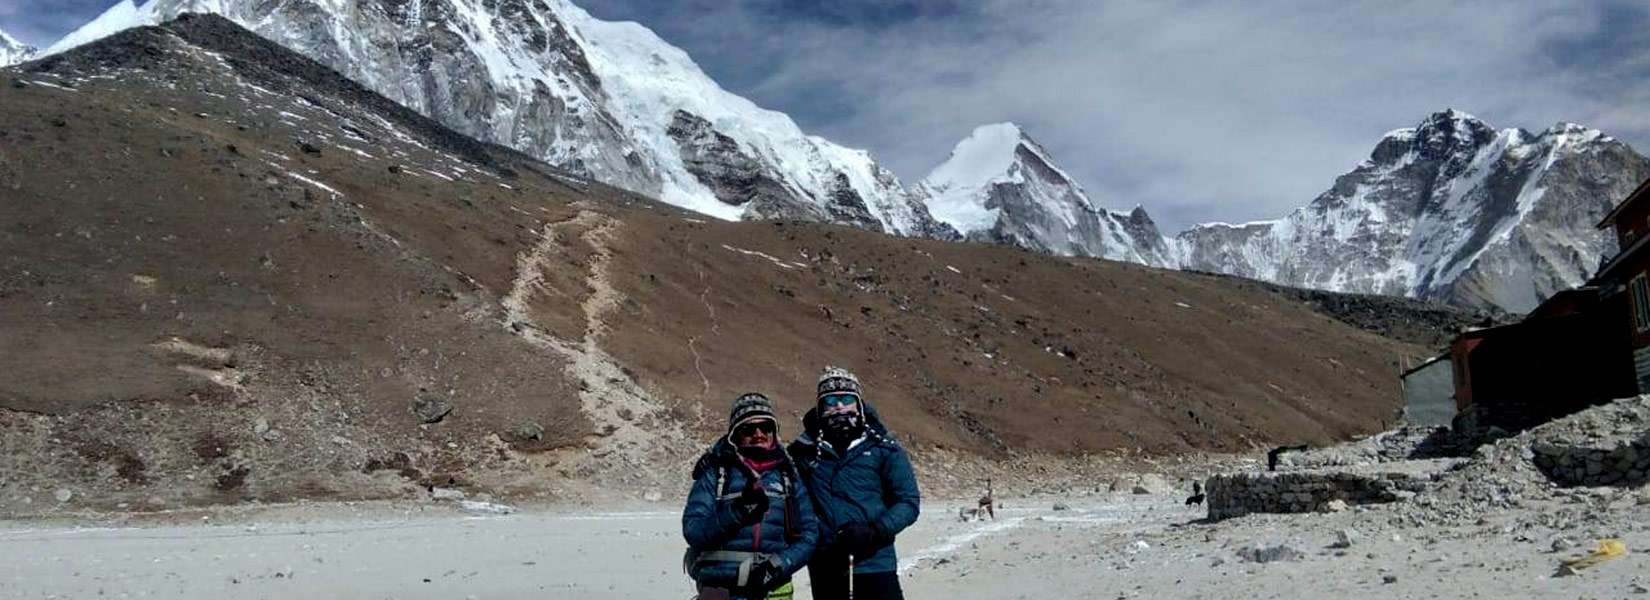 Everest Base Camp Trek guide, season, weather & equipment